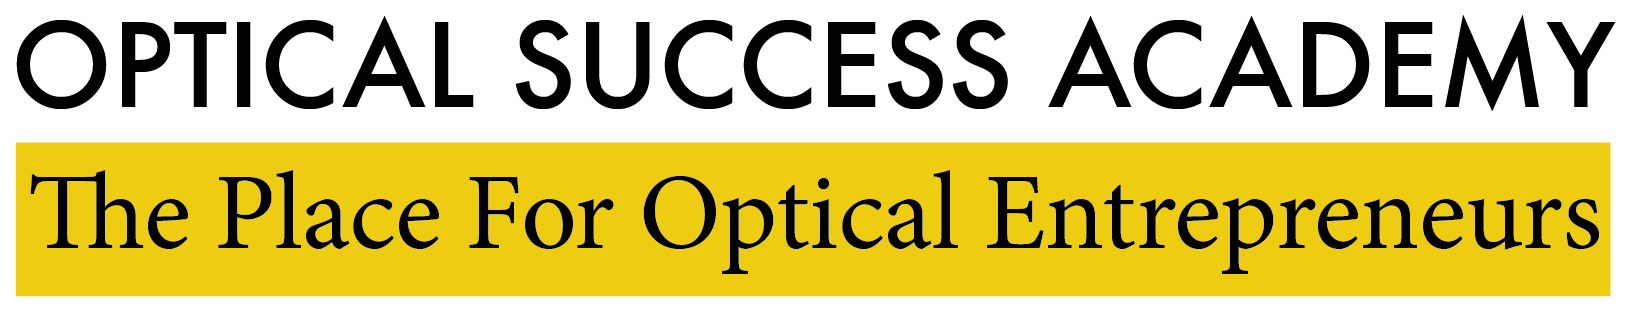 Optical Success Academy